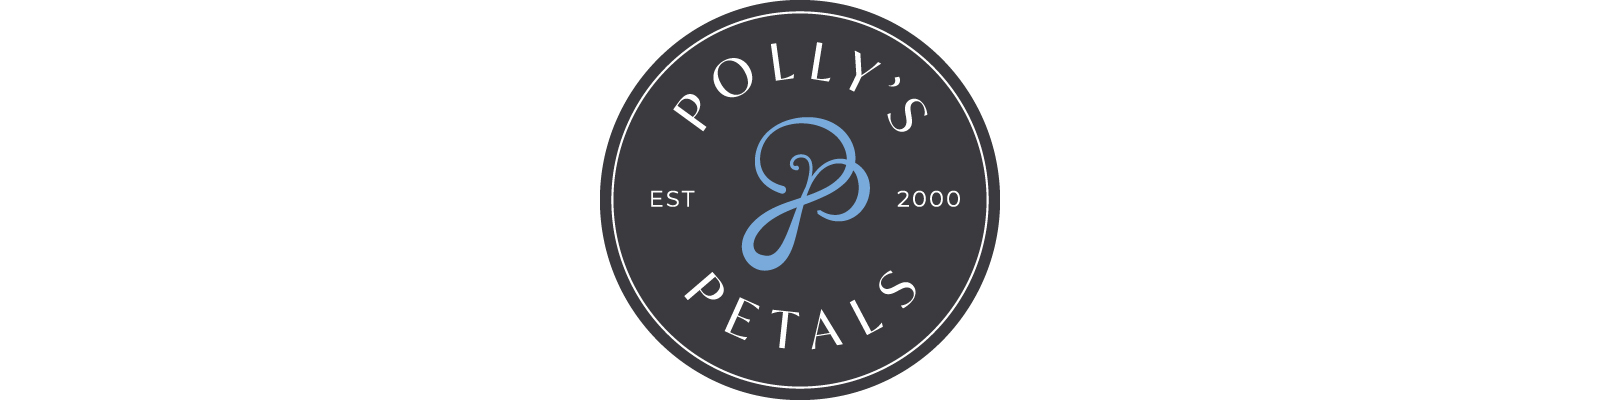 Alternate version of florist Polly Klein's logo in a seal